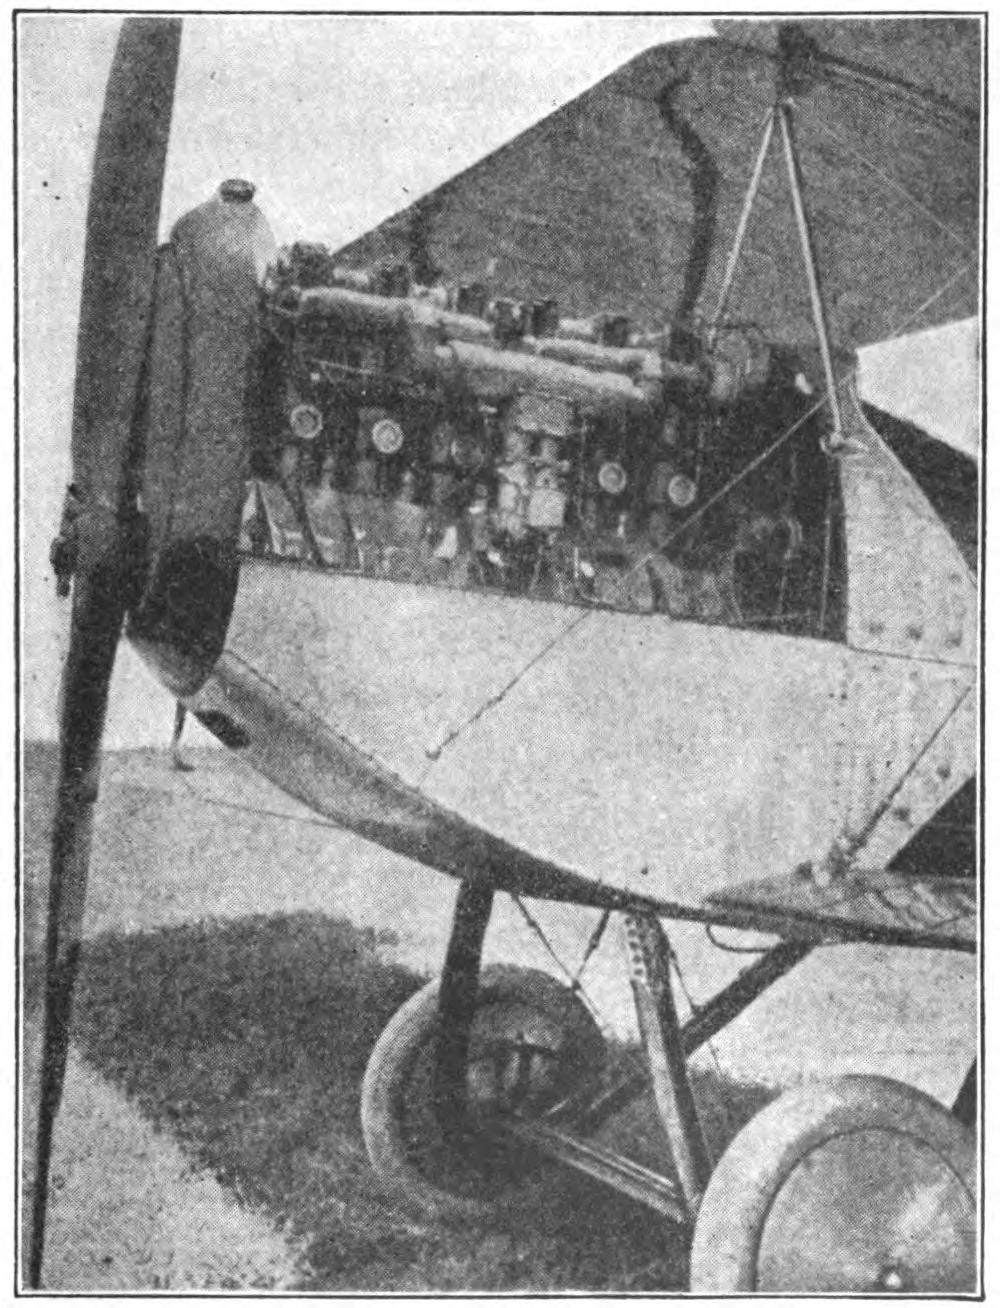 A 6-Cylinder Hall-Scott Motor Installed in a Martin Biplane.